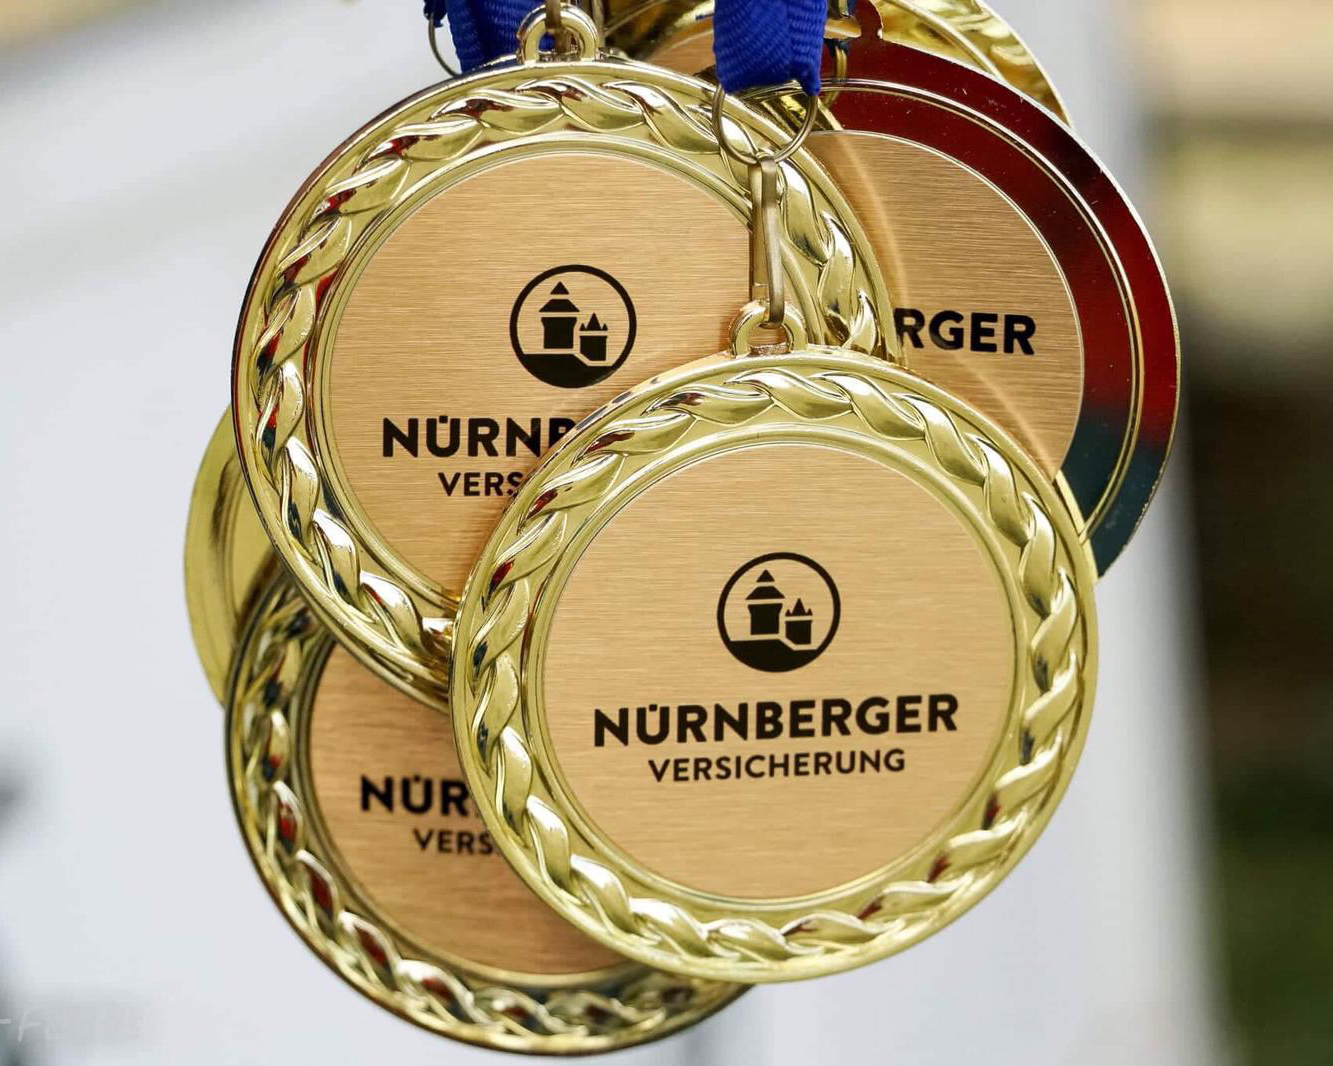 NÜRNBERGER Burg Pokal der Junioren 2019. Foto: NÜRNBERGER Versicherung